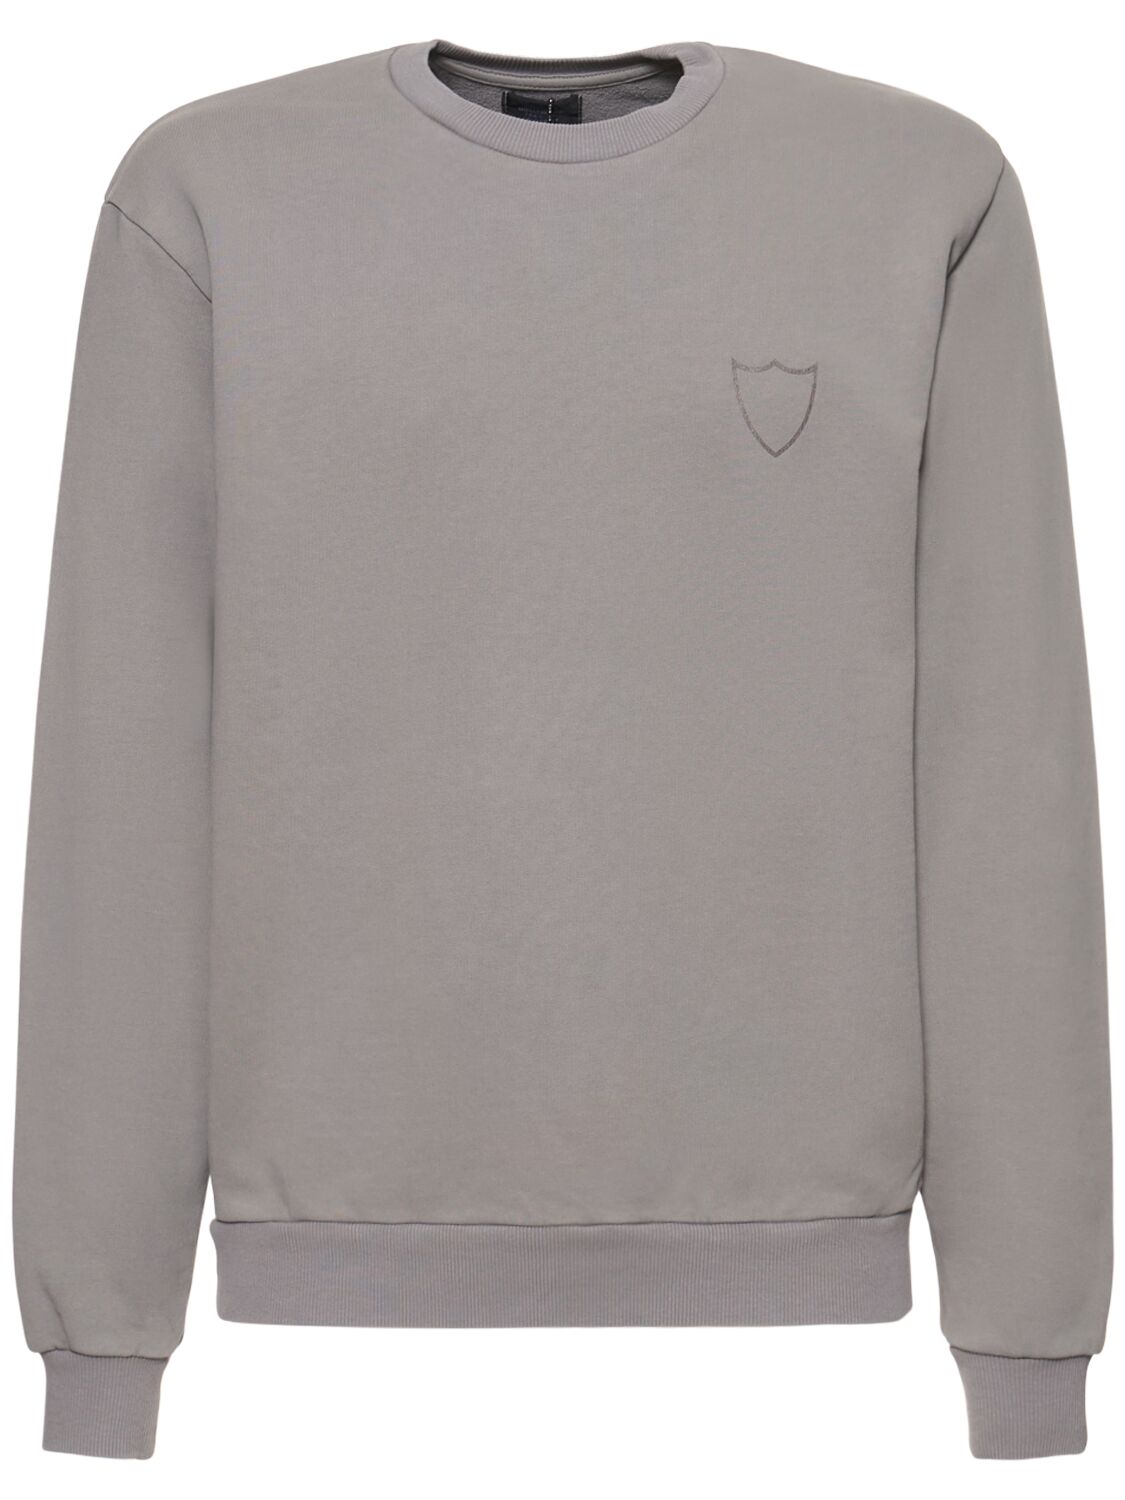 Htc Los Angeles Small Logo Cotton Crewneck Sweatshirt In Light Grey